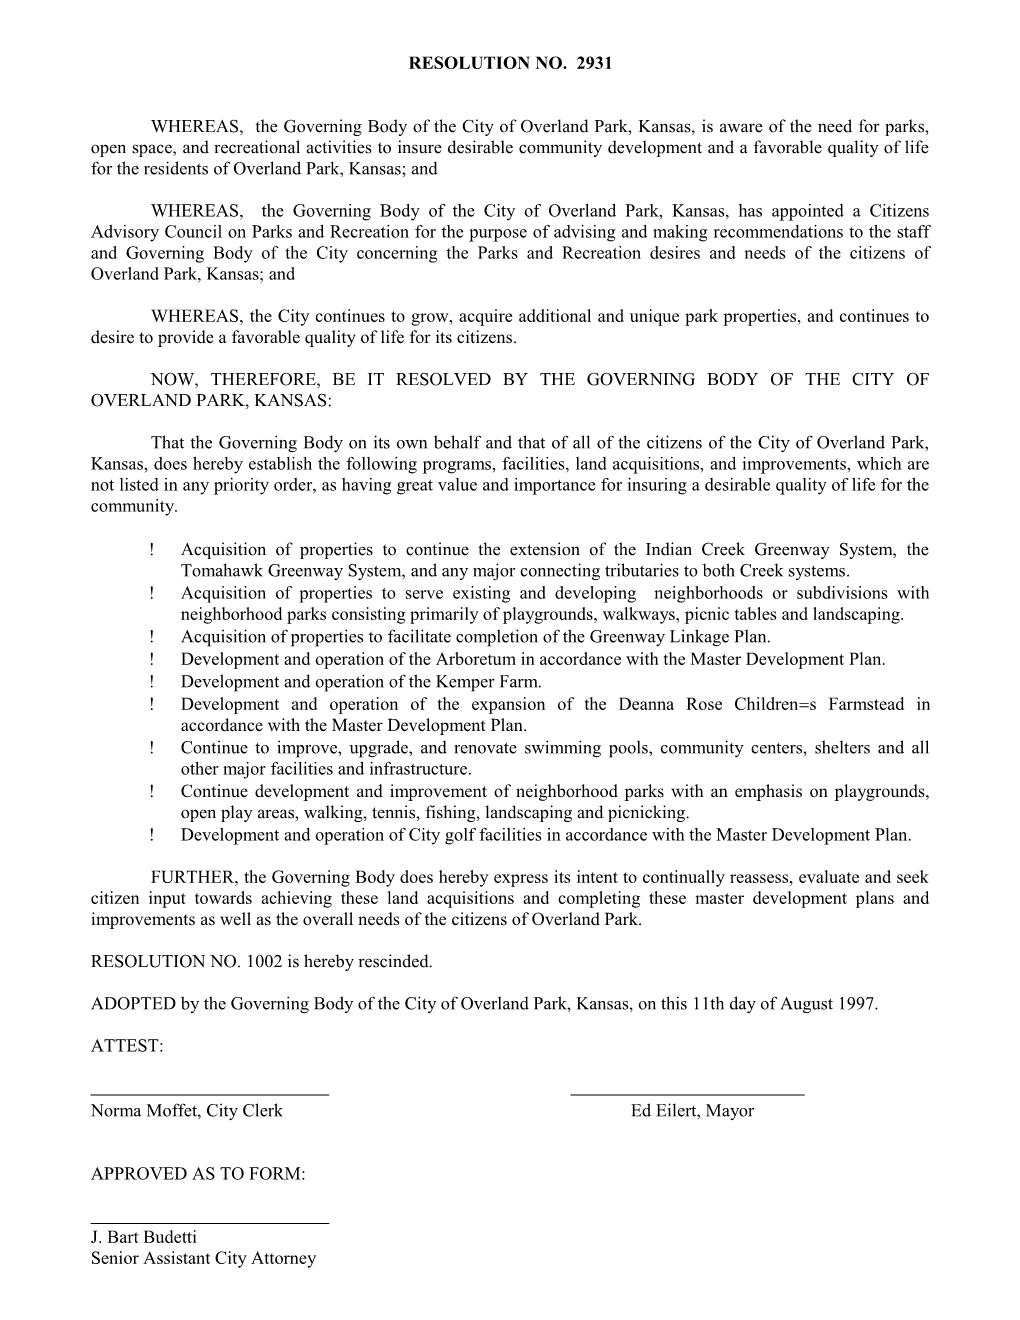 Park Development Plan II - Resolution No. 2931 - August 11, 1999